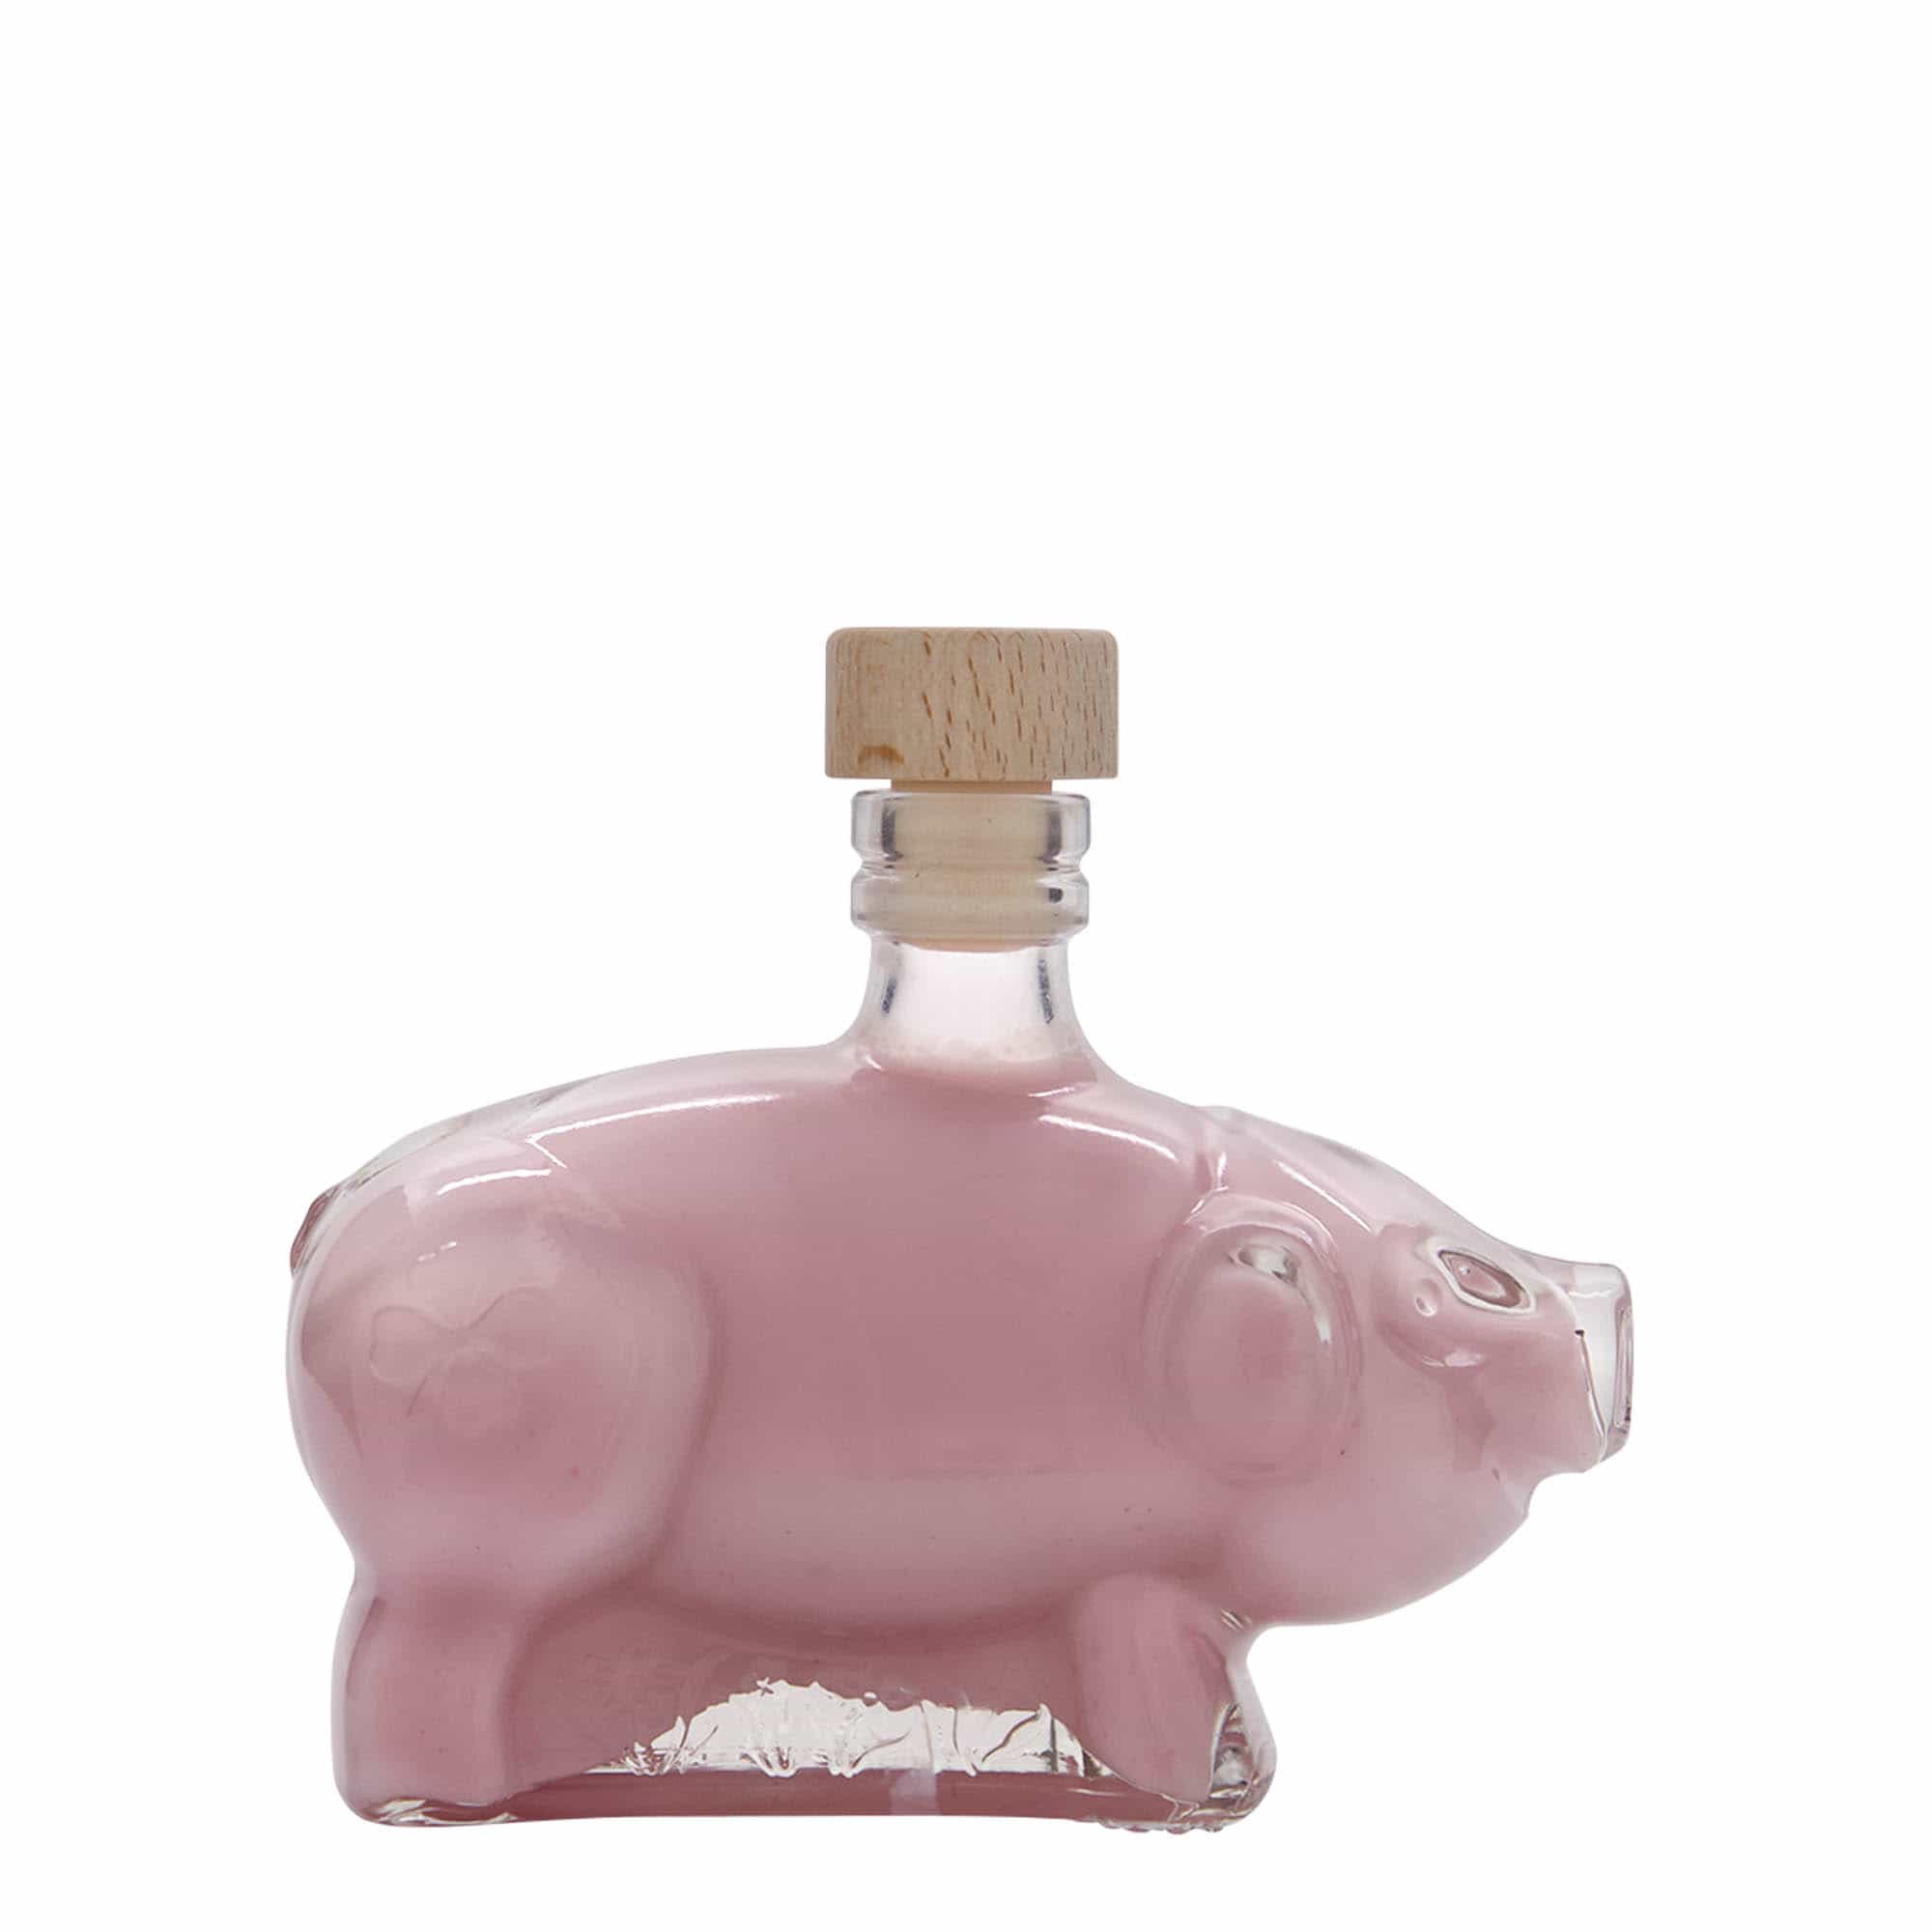 200 ml glass bottle 'Piglet', closure: cork